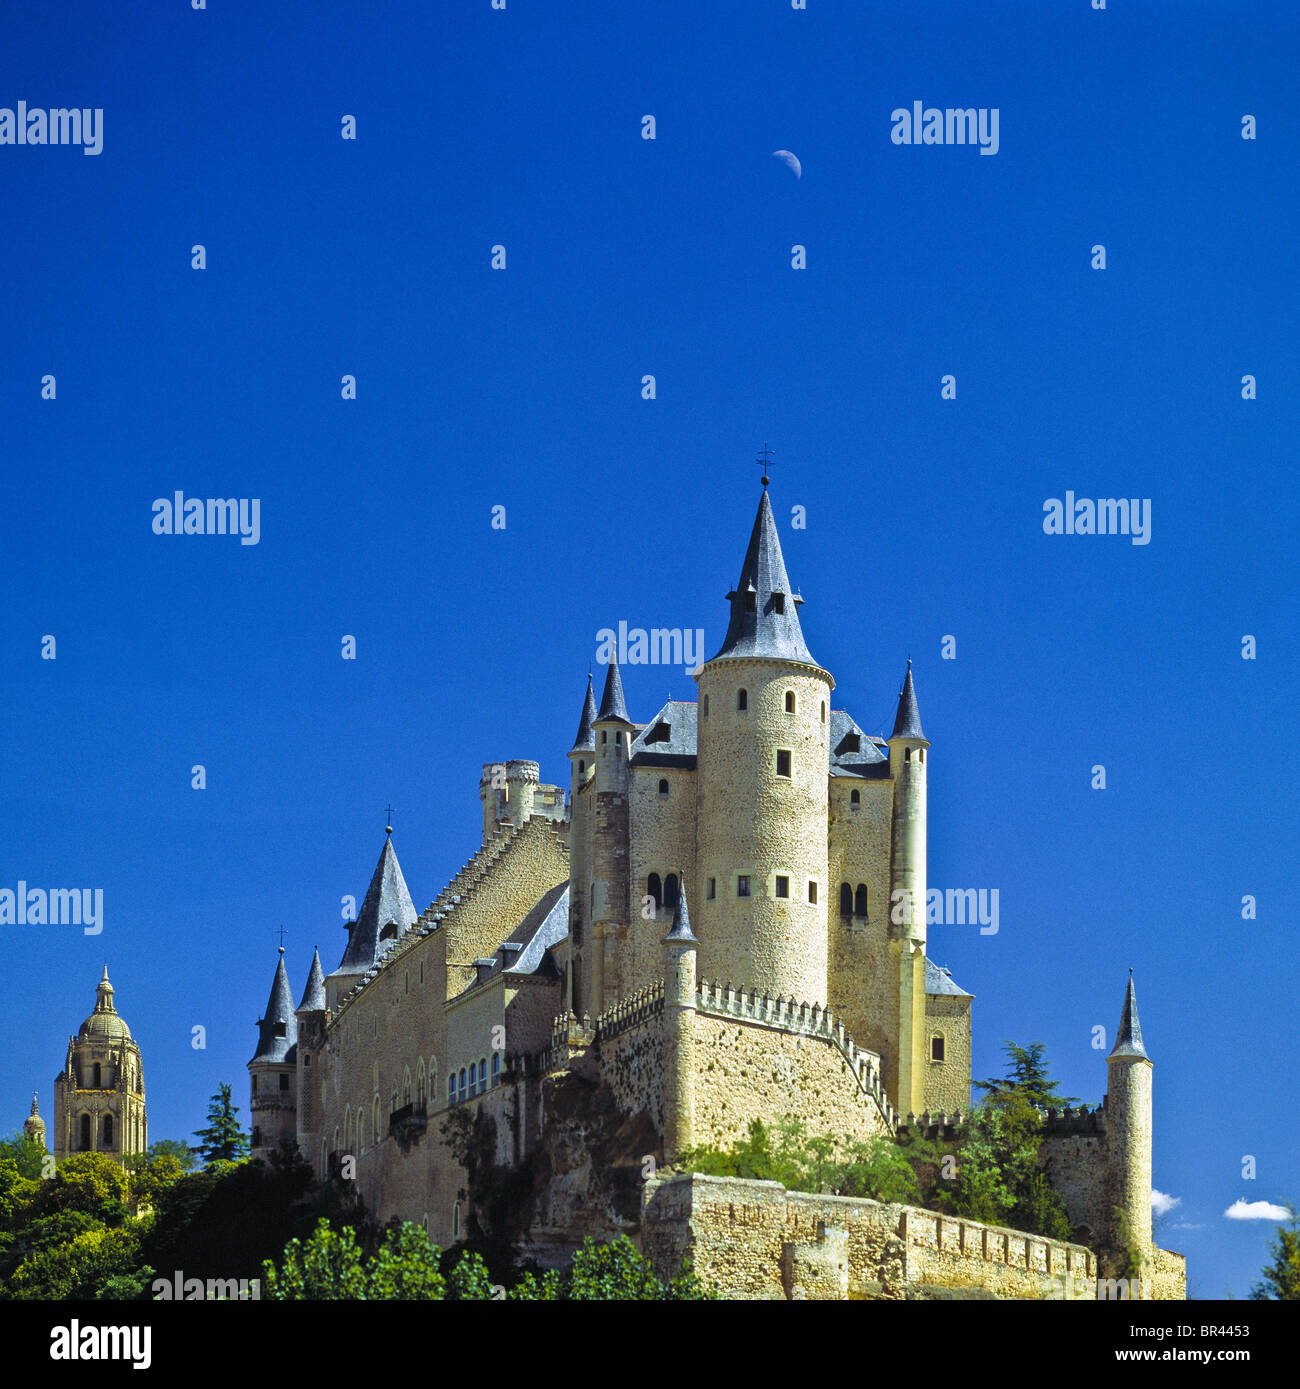 Alcazar of Segovia, Segovia, Spain, Europe Stock Photo